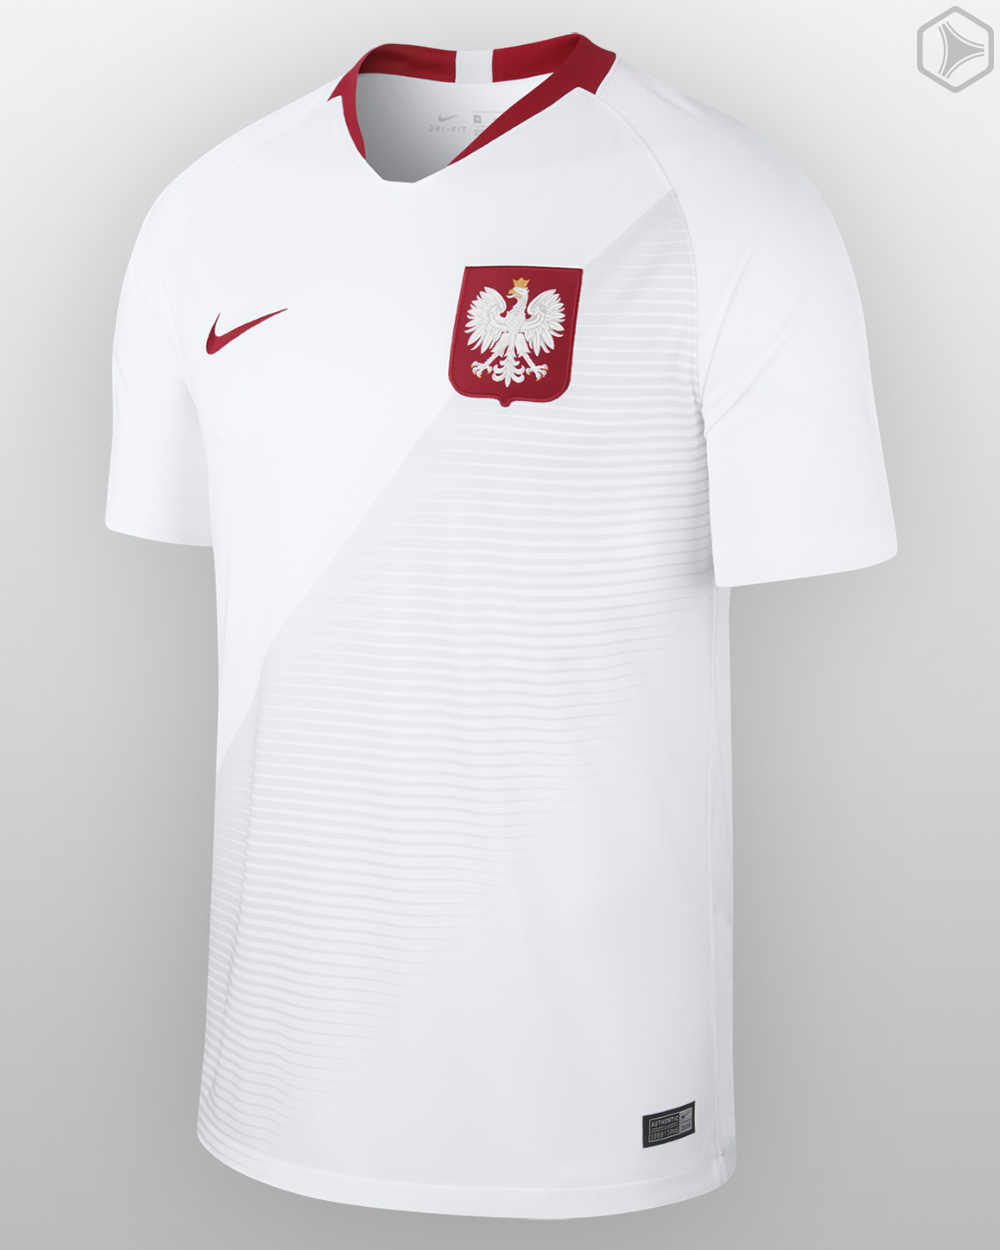 Camiseta Nike de Polonia Mundial 2018